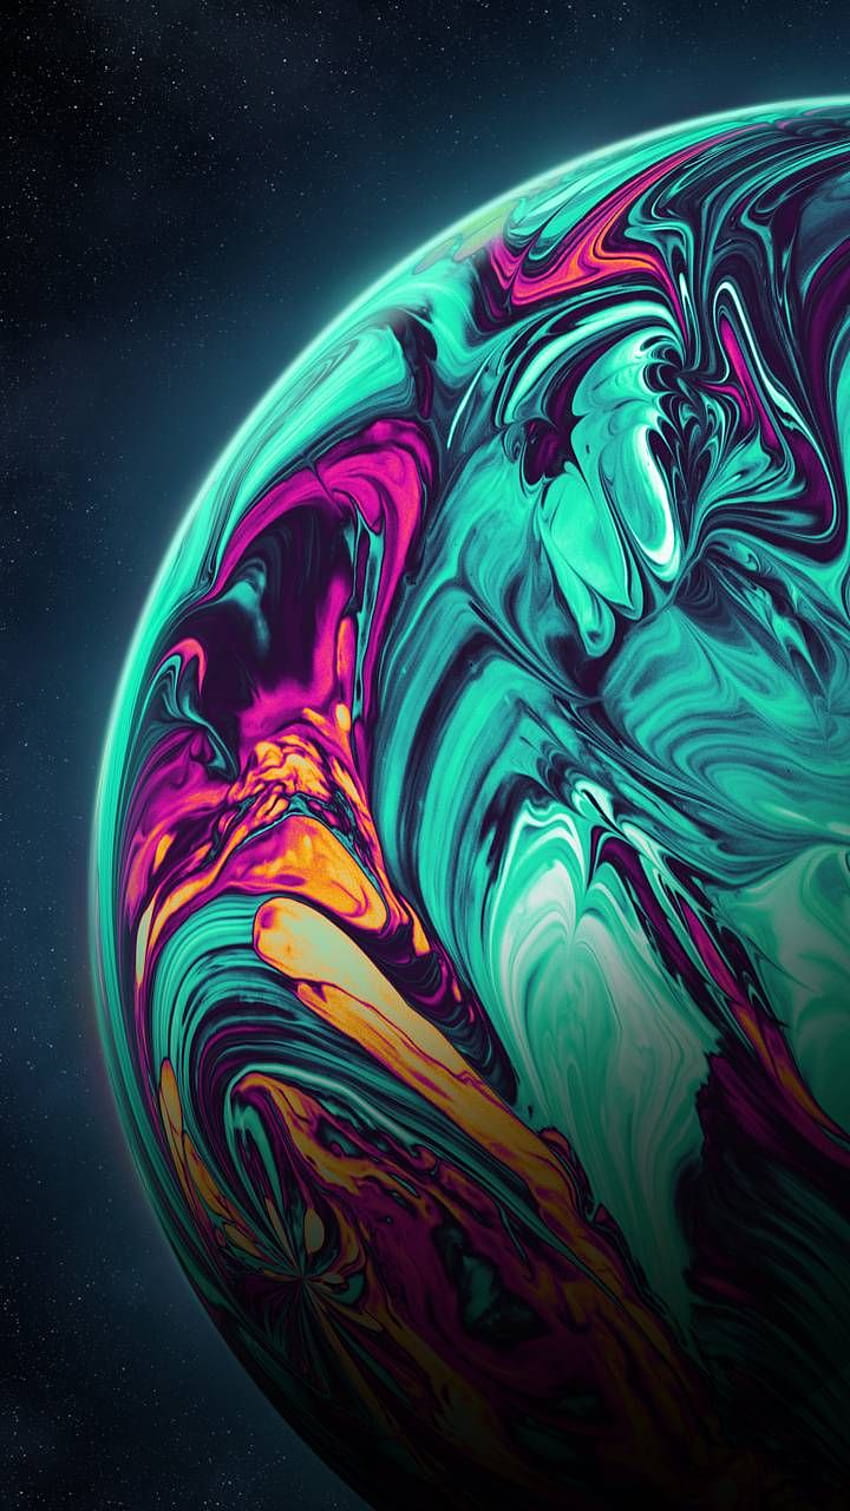 Planet Akrilik oleh Geoglyser, bumi neon wallpaper ponsel HD